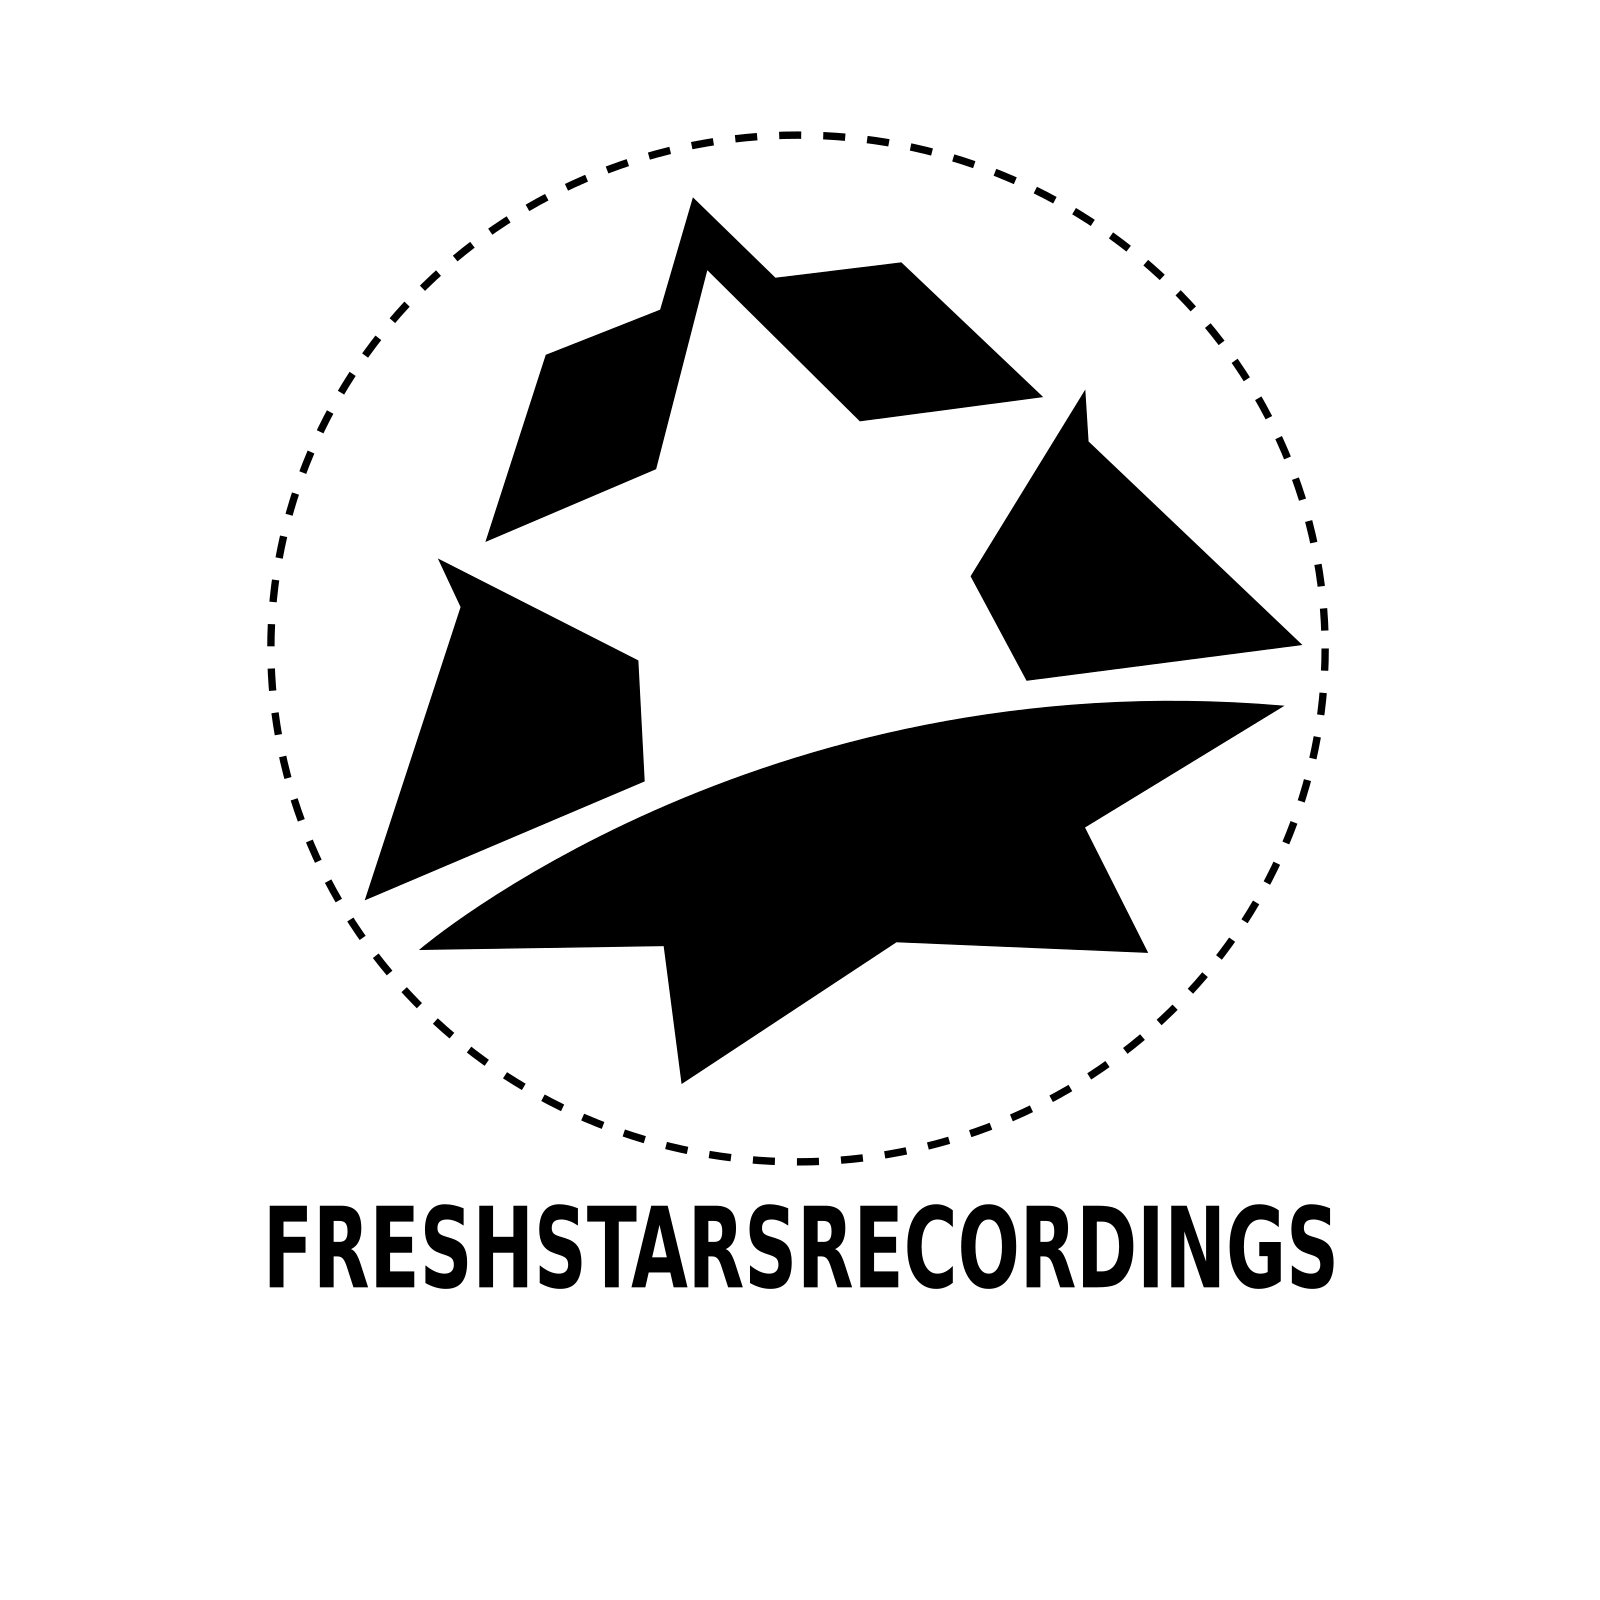 Record Label FreshStarsRecordings electronic music label https://t.co/oGHISkVoA9 artists: techtick, toyz make noize, litacoil
#FSR #FreshStarsRec